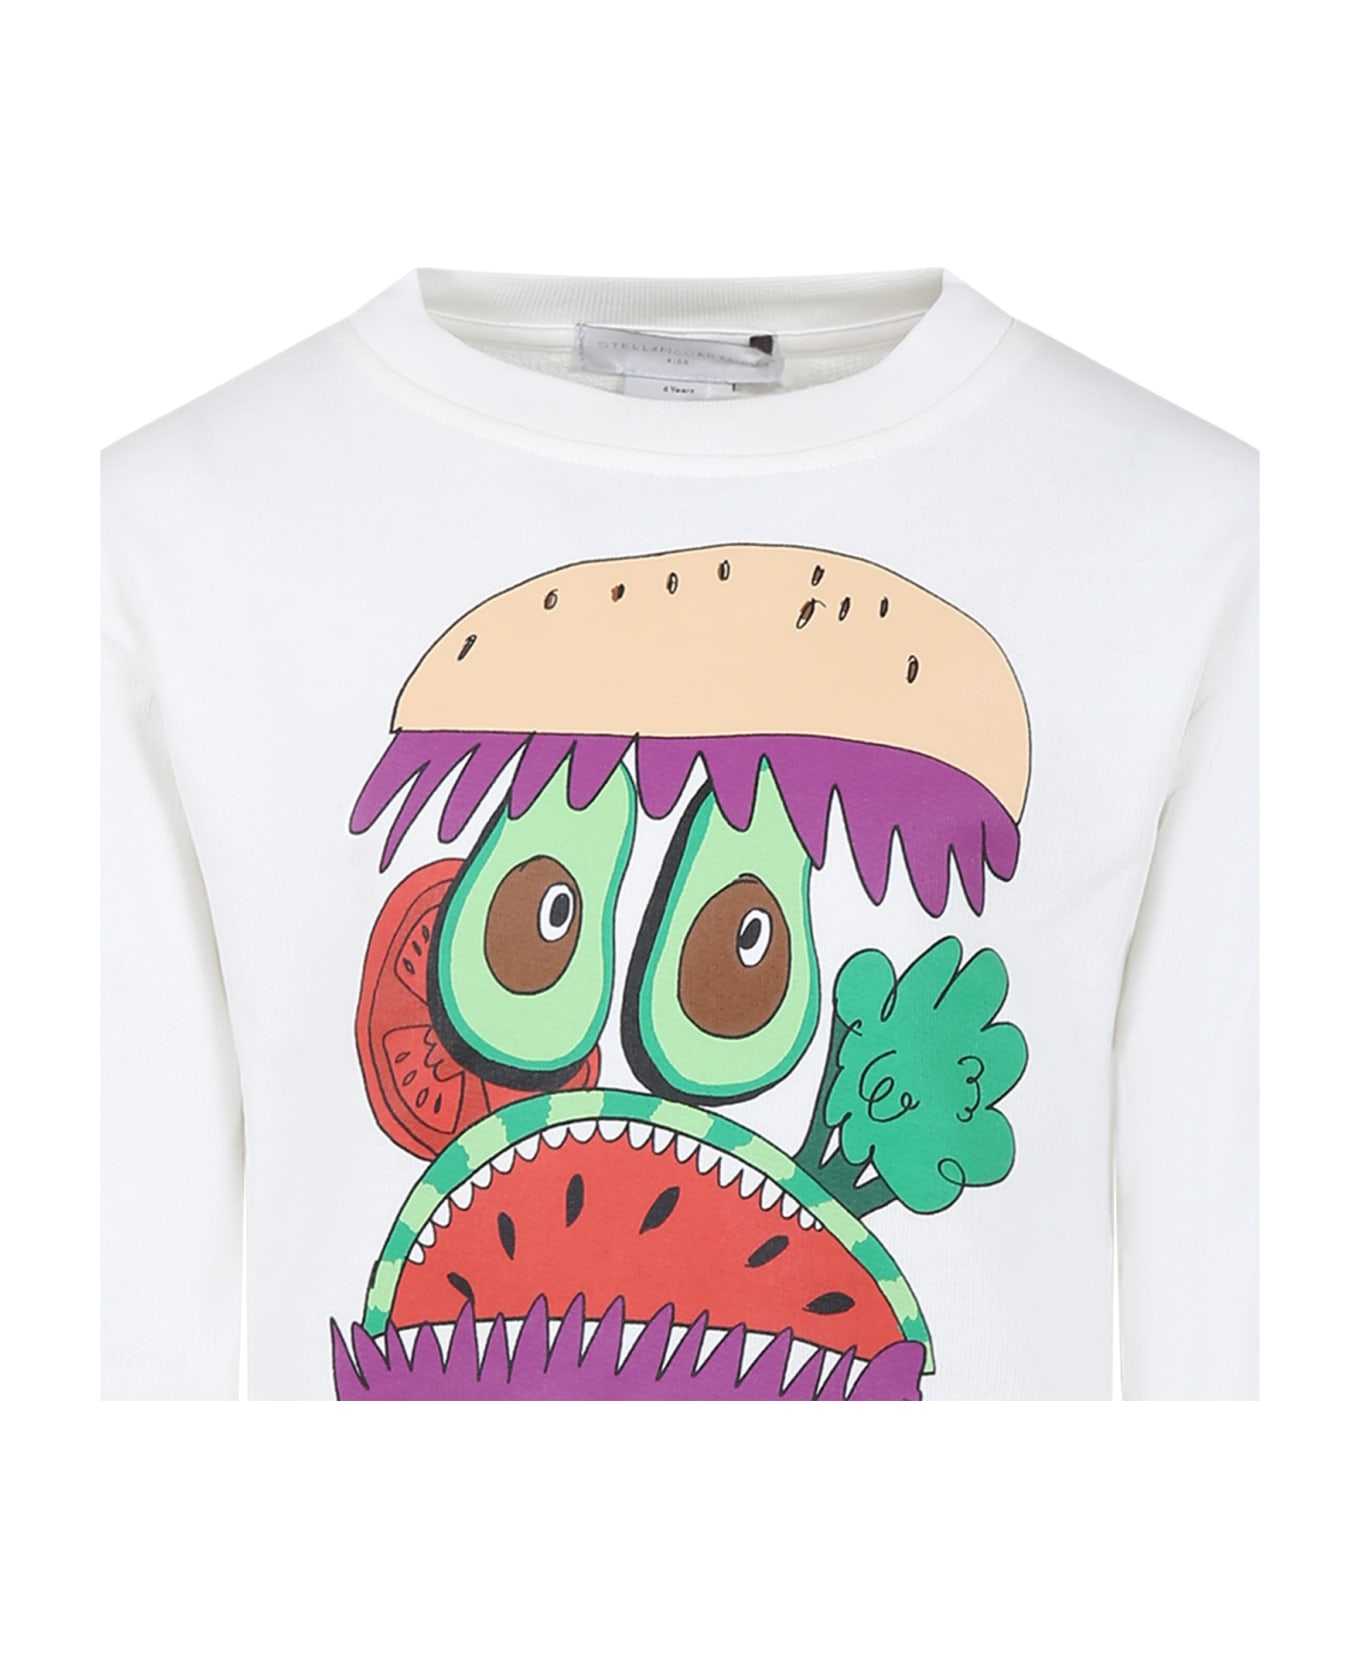 Stella McCartney Kids White Sweatshirt For Boy With Hamburger Print And Writing - White